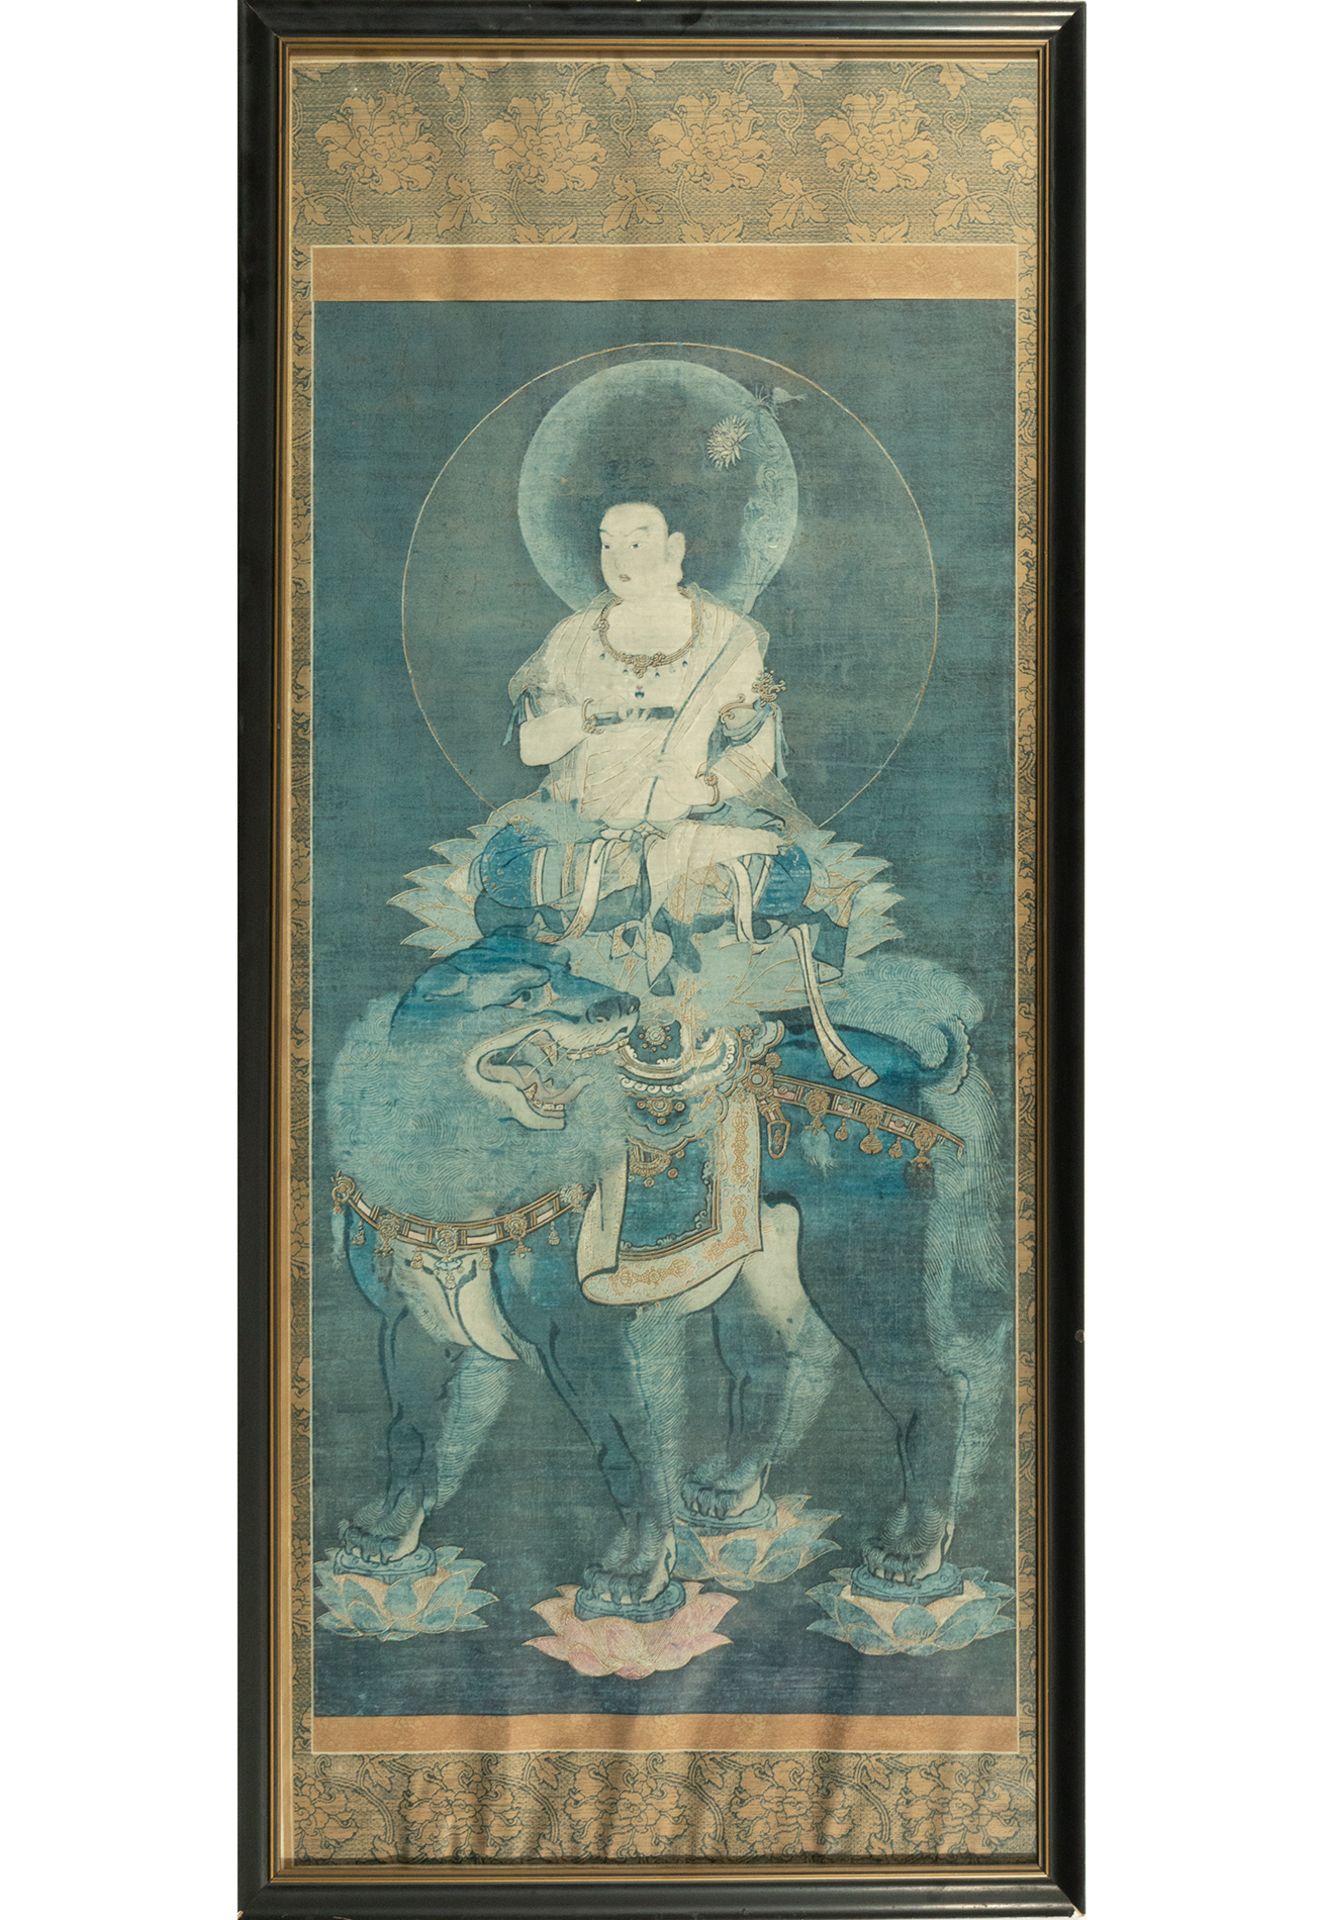 Hand-painted silk Batik, framed, 19th - 20th century Chinese school